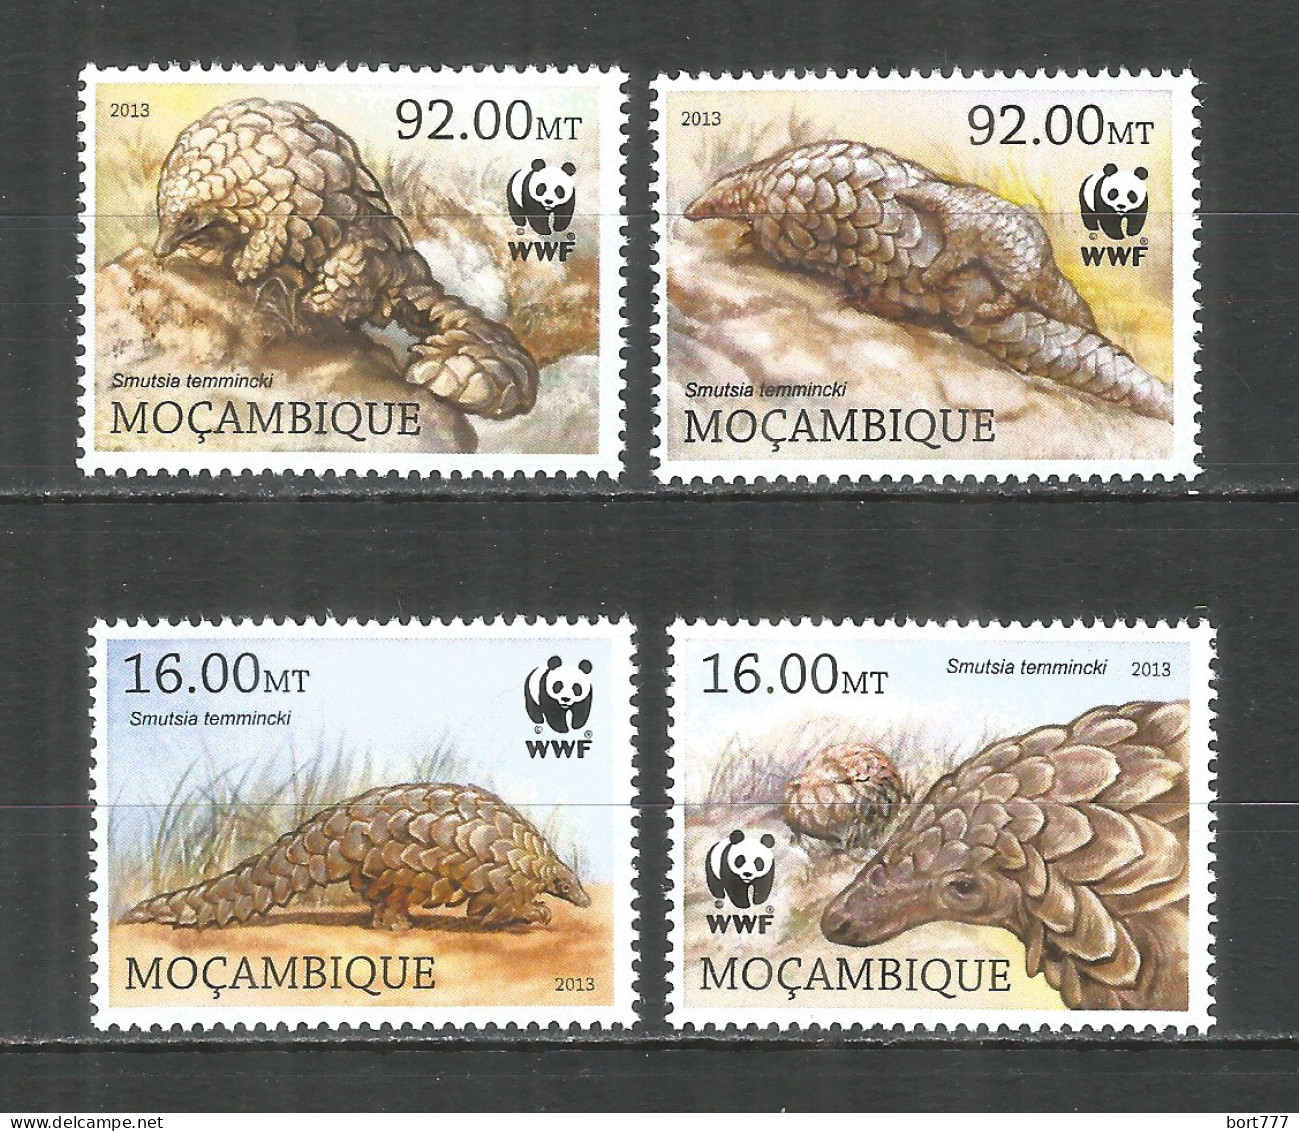 Mozambique 2015 Mint Stamps MNH(**) WWF – Pangolin - Mozambique